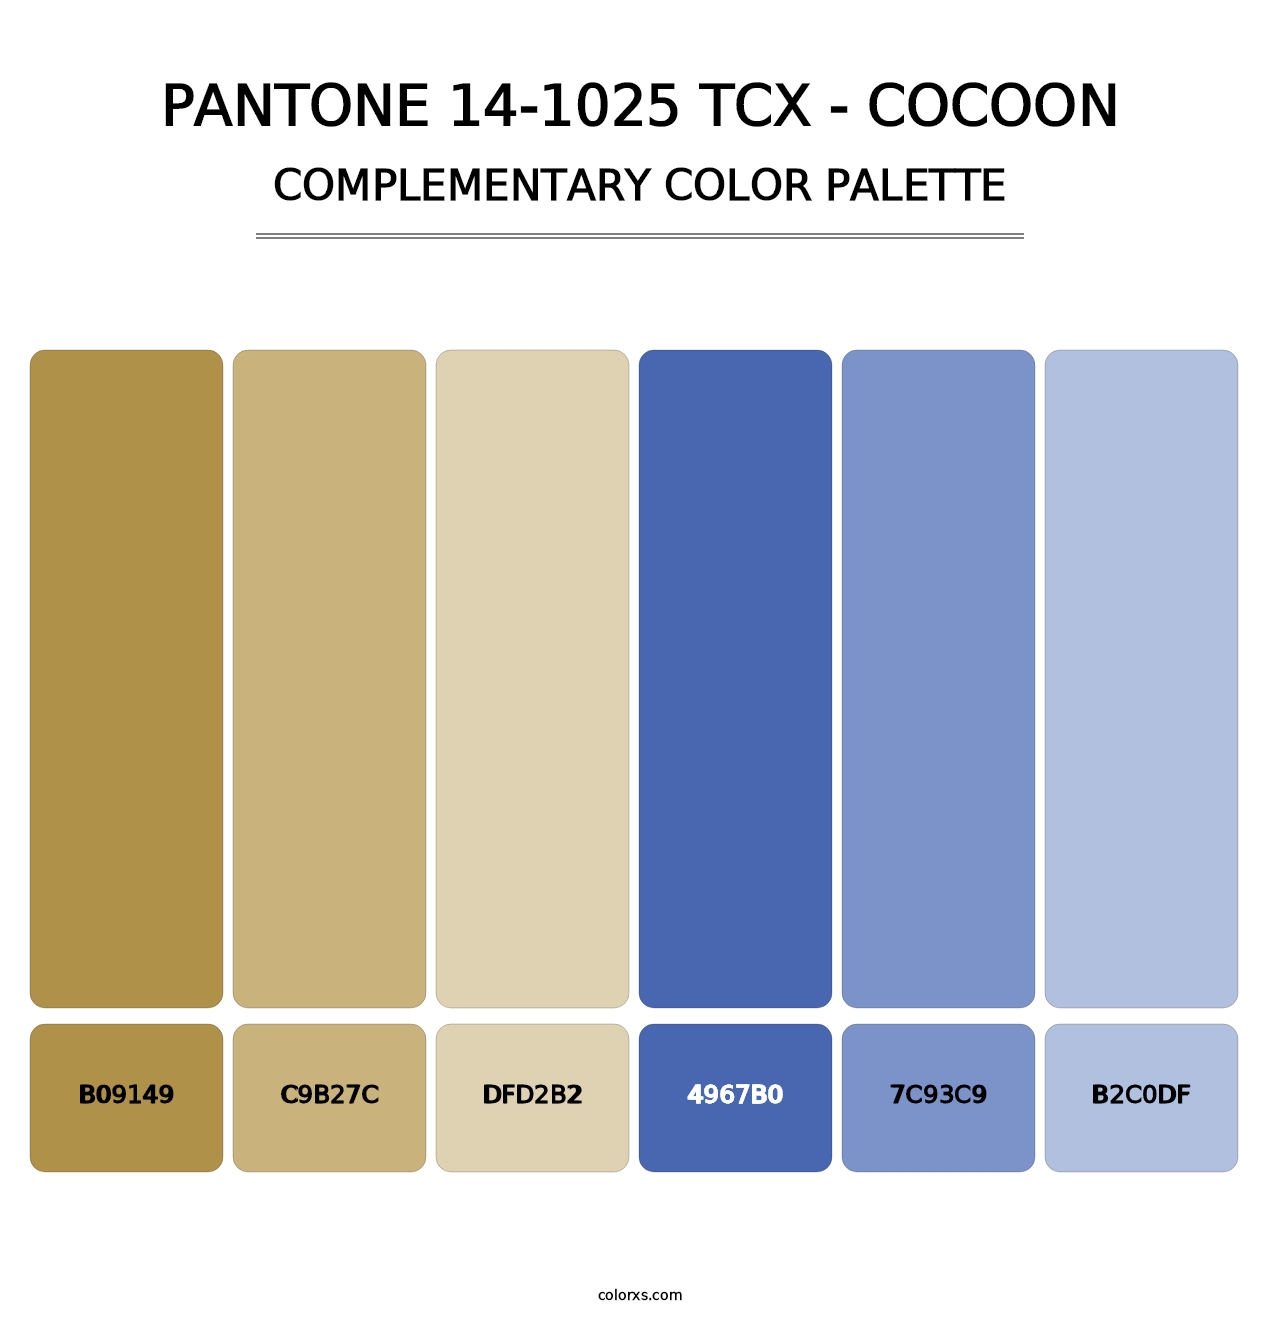 PANTONE 14-1025 TCX - Cocoon - Complementary Color Palette